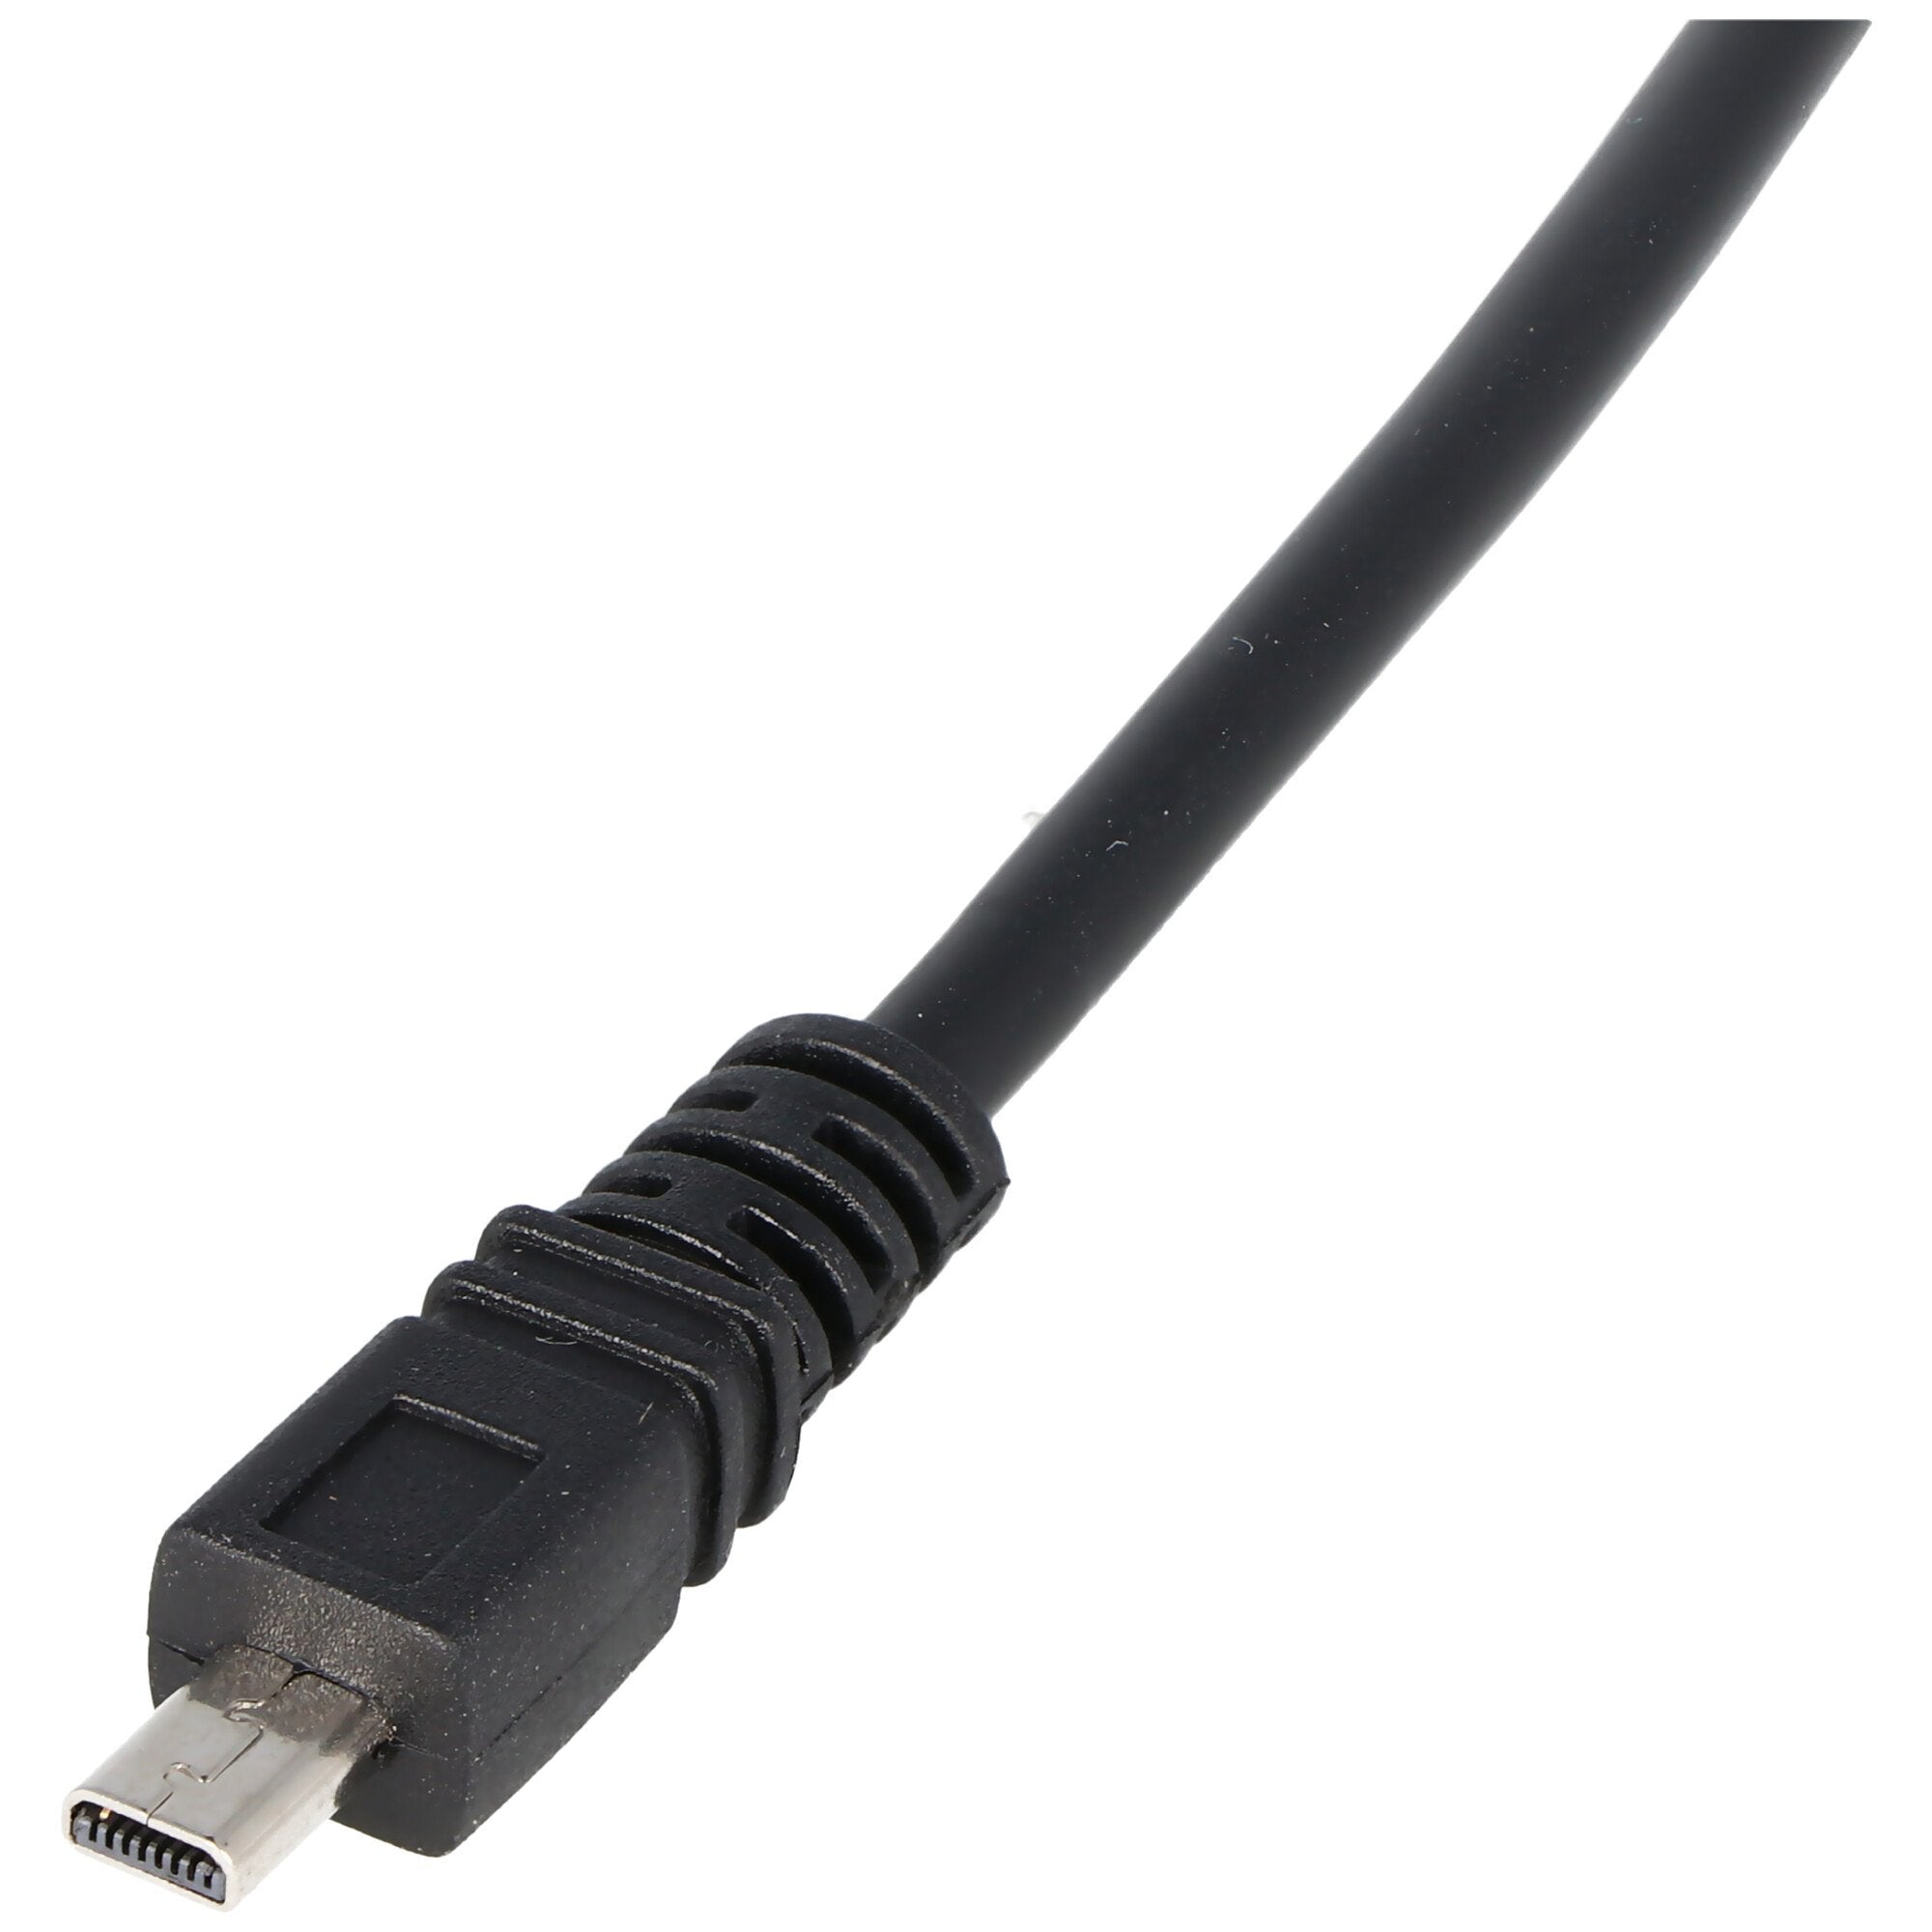 USB cable suitable for Casio, Nikon, Panasonic Lumix K1HA08CD0019